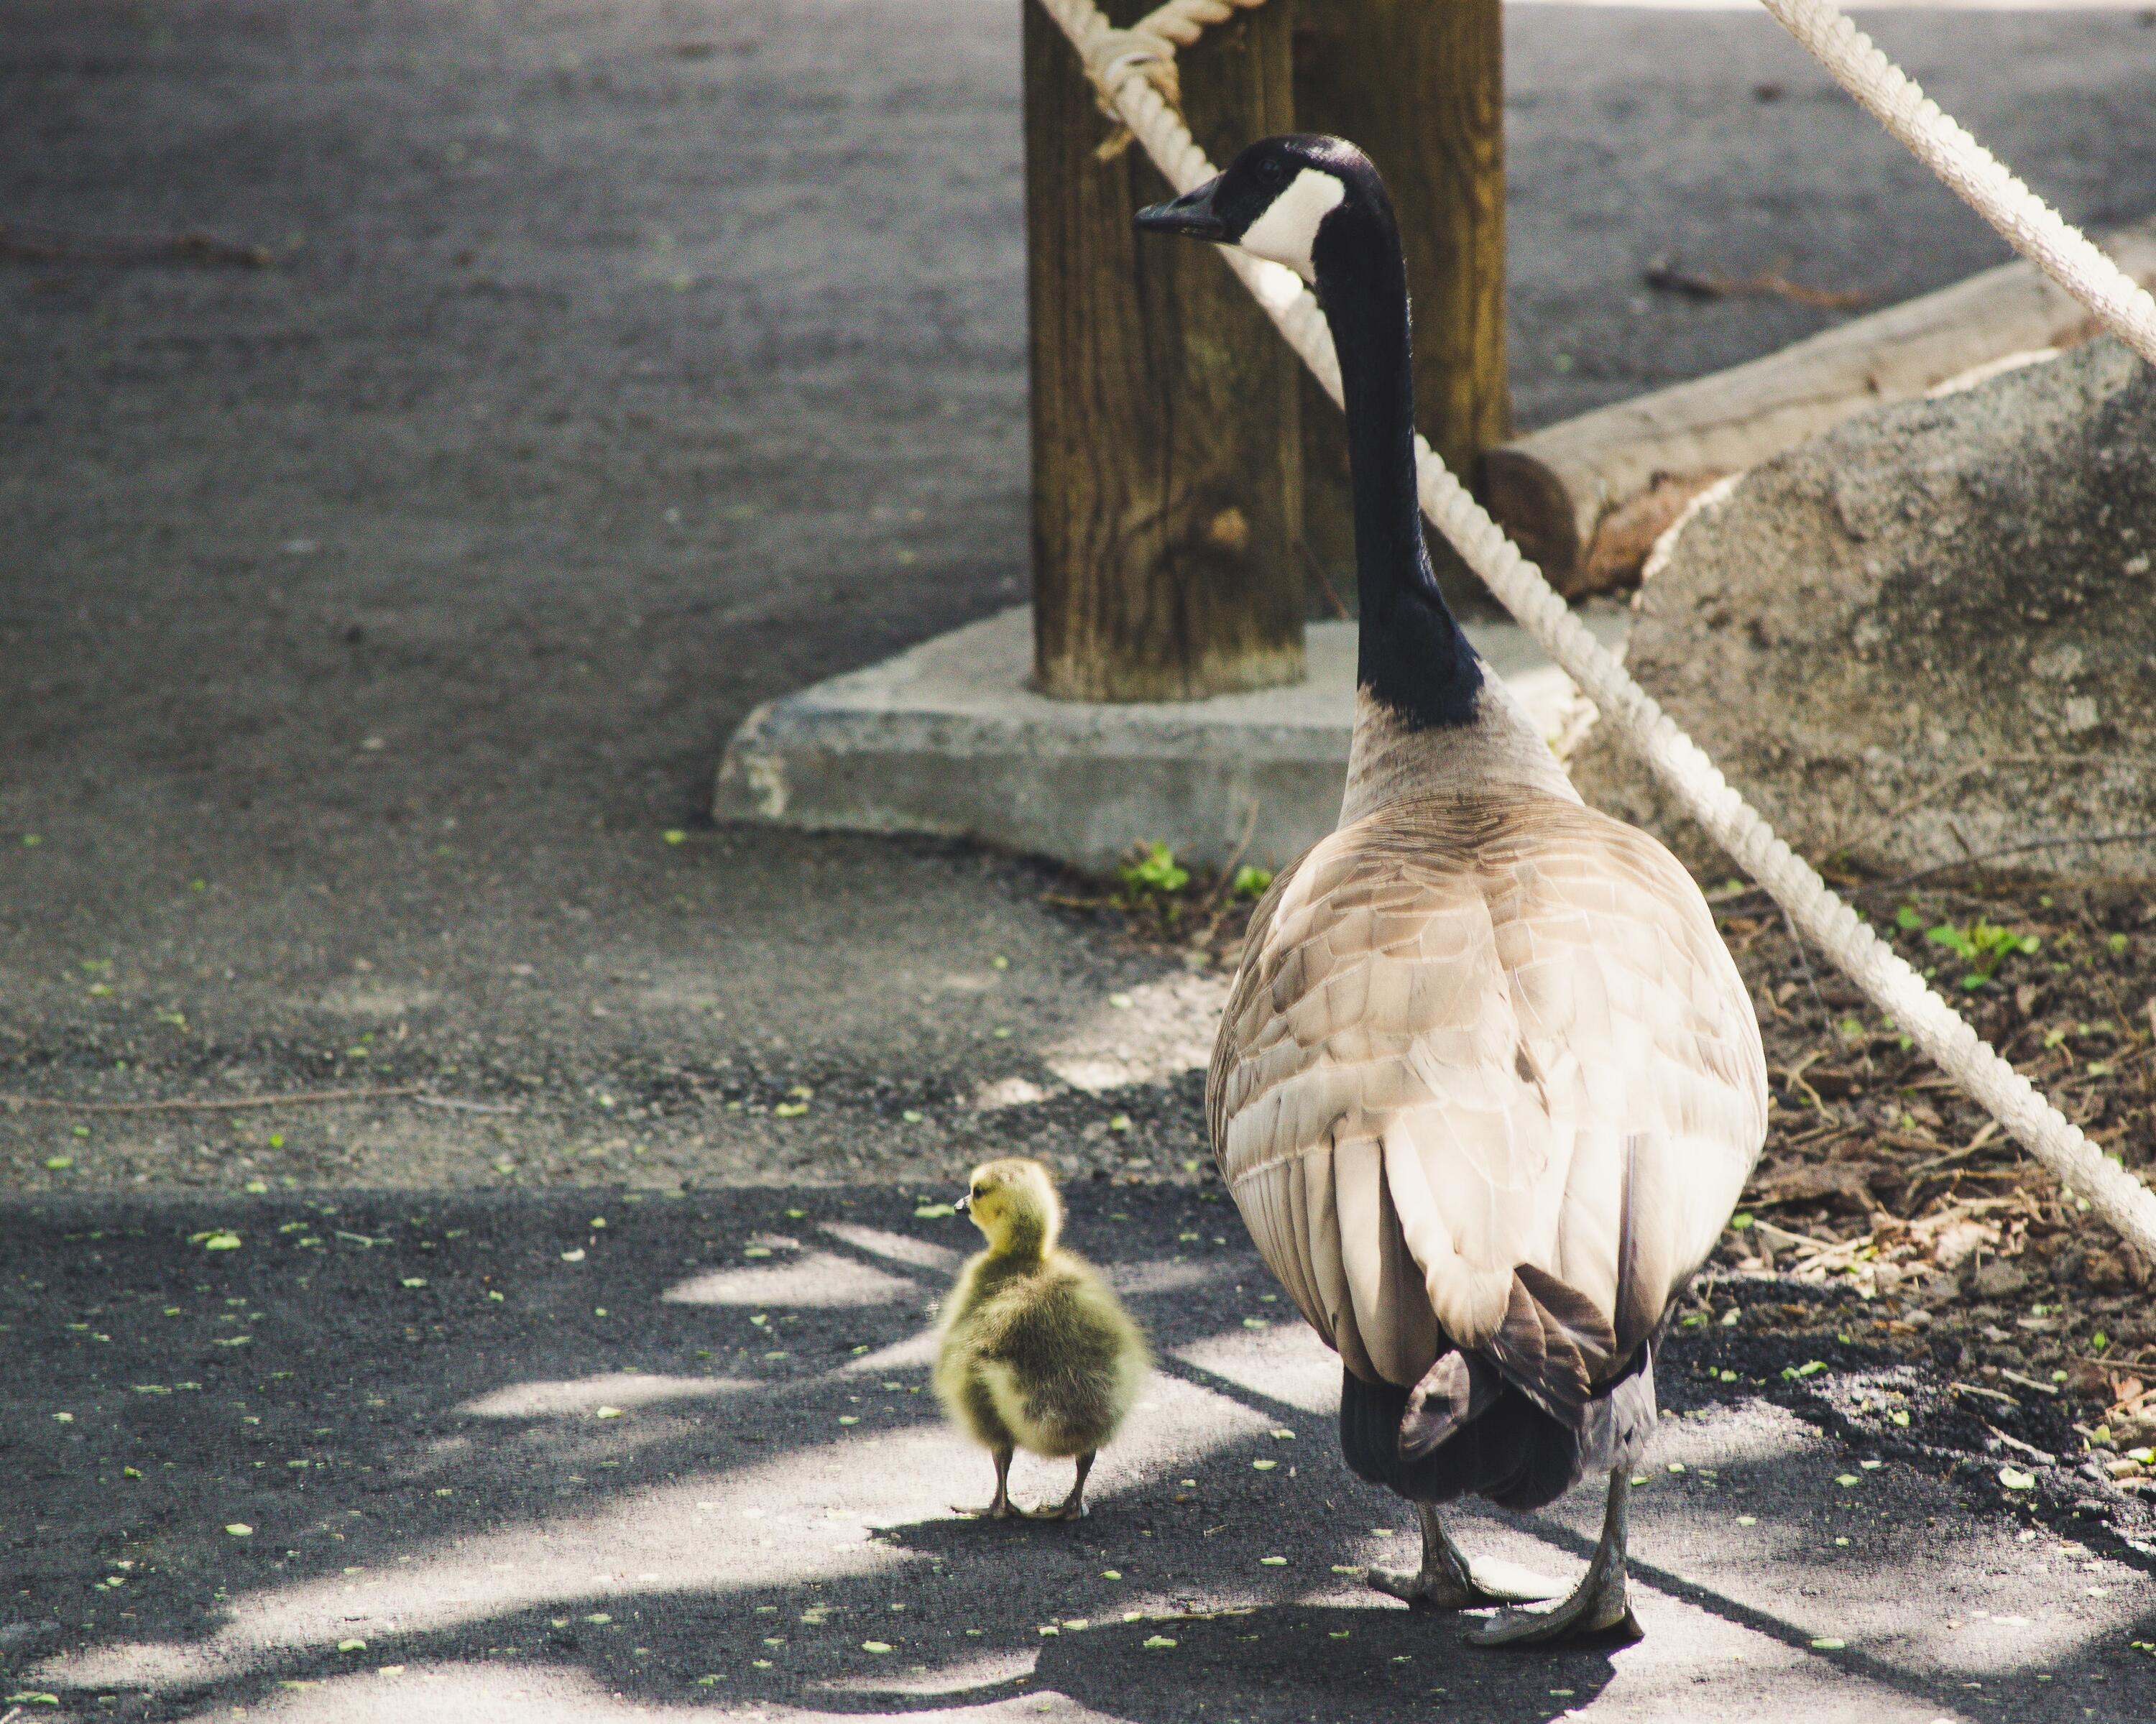 bird and chick on sidewalk